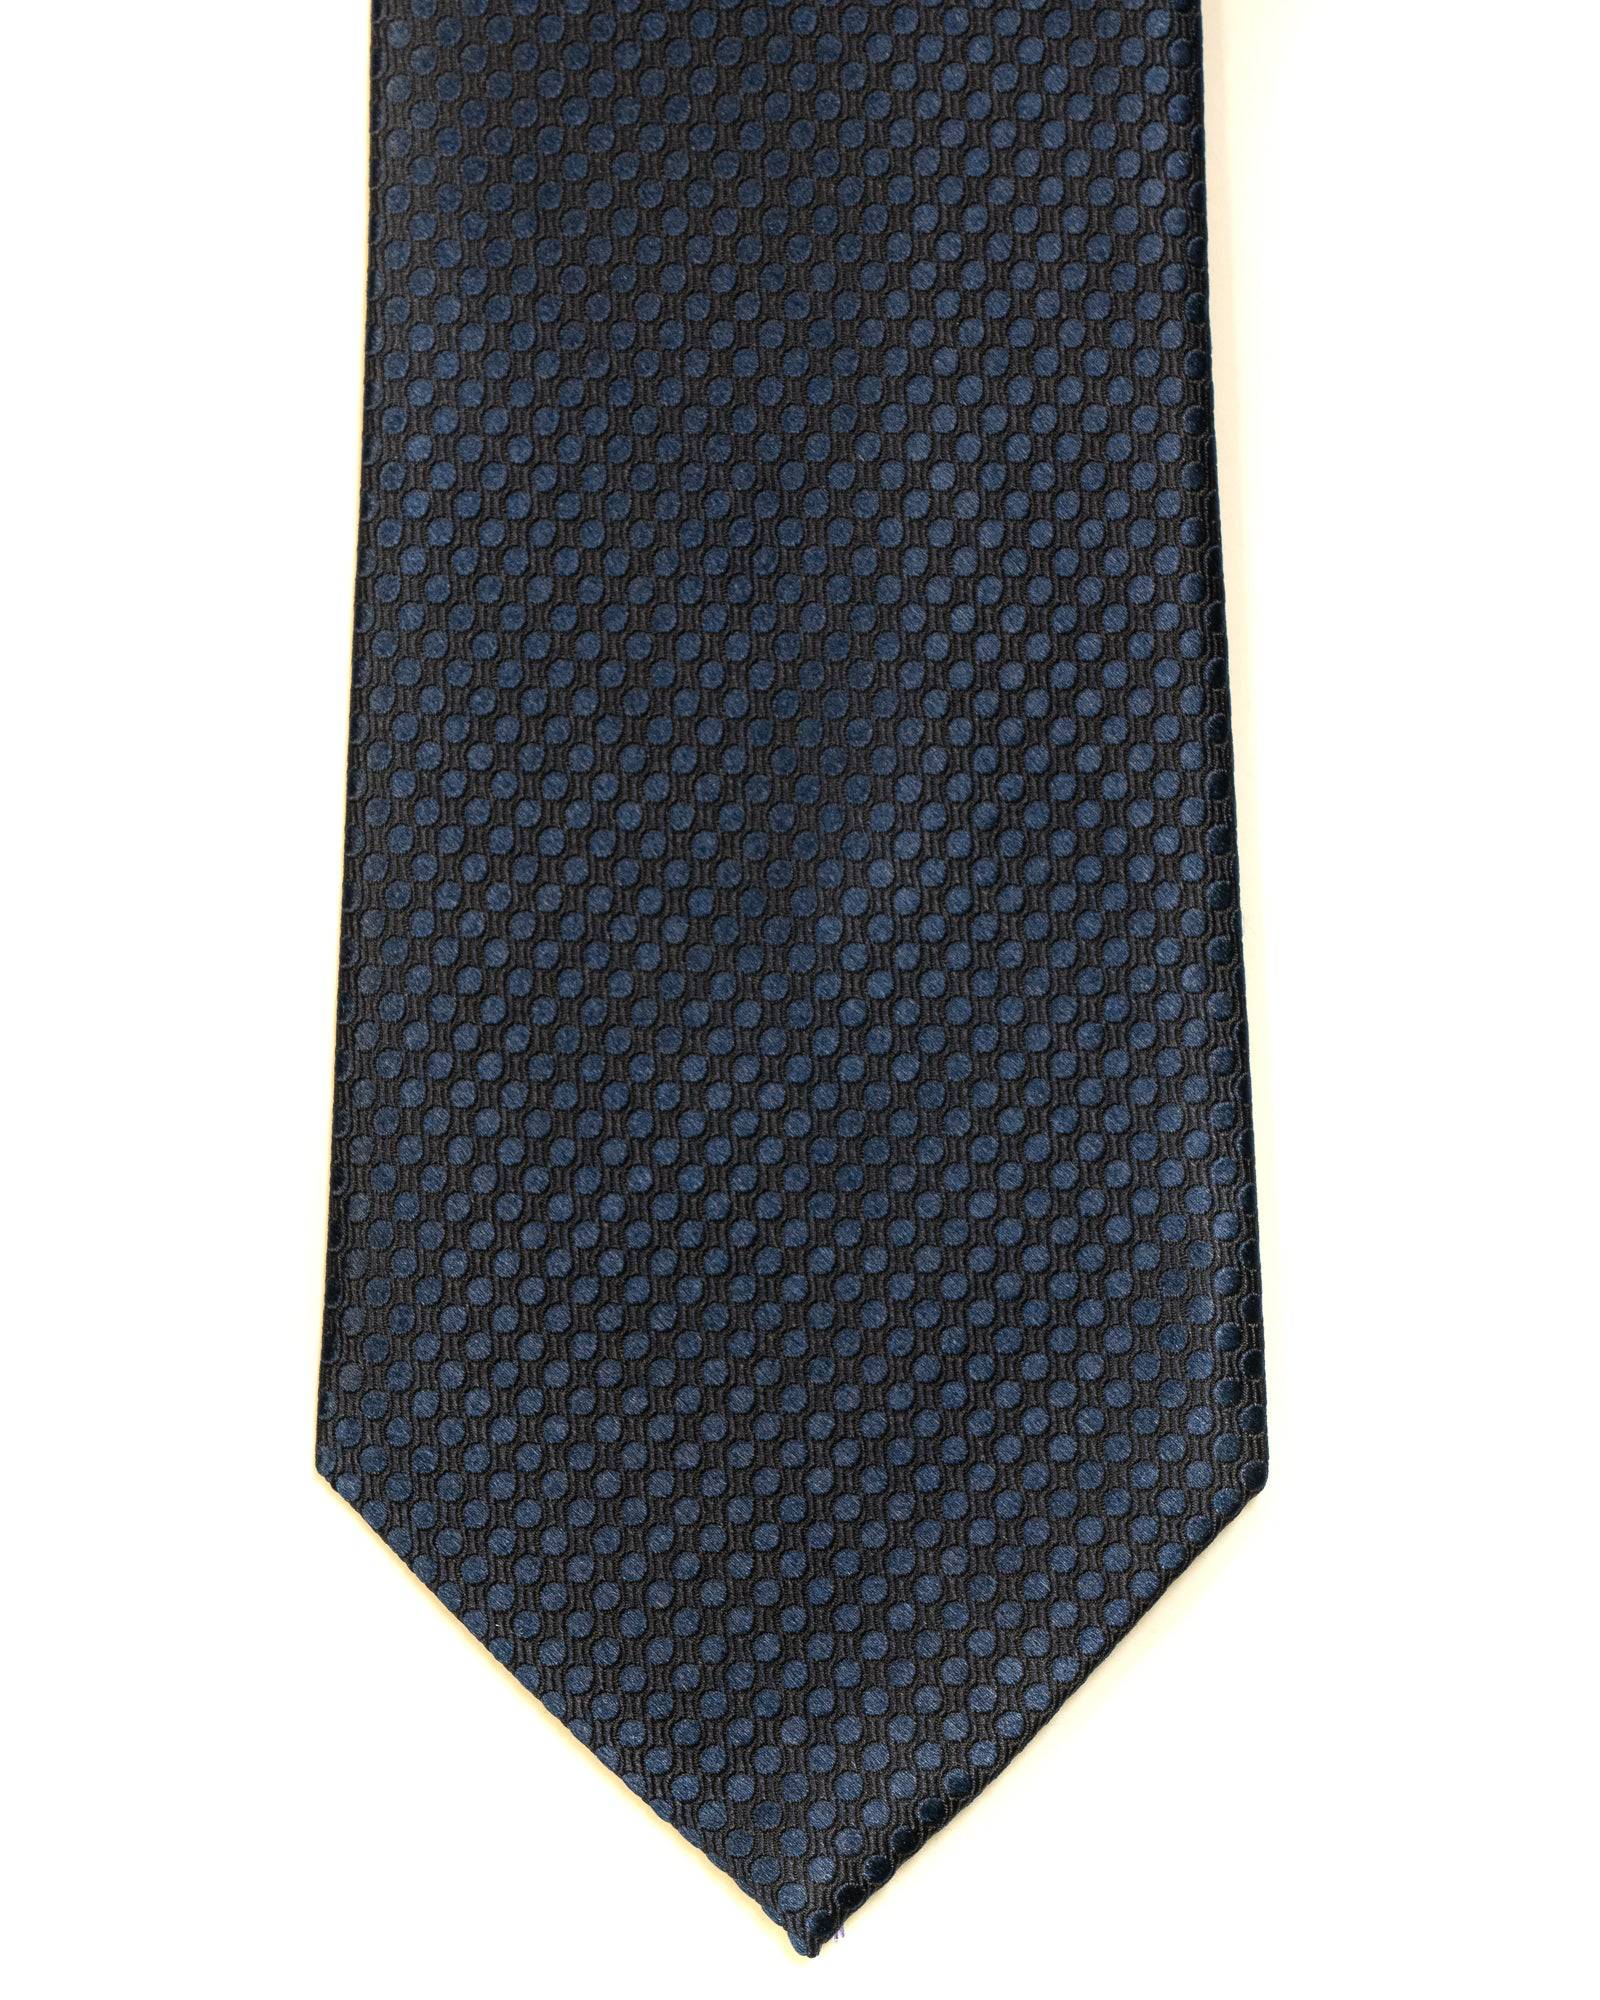 Silk Tie In Deep Blue Circle Jacquard Design Solid - Rainwater's Men's Clothing and Tuxedo Rental